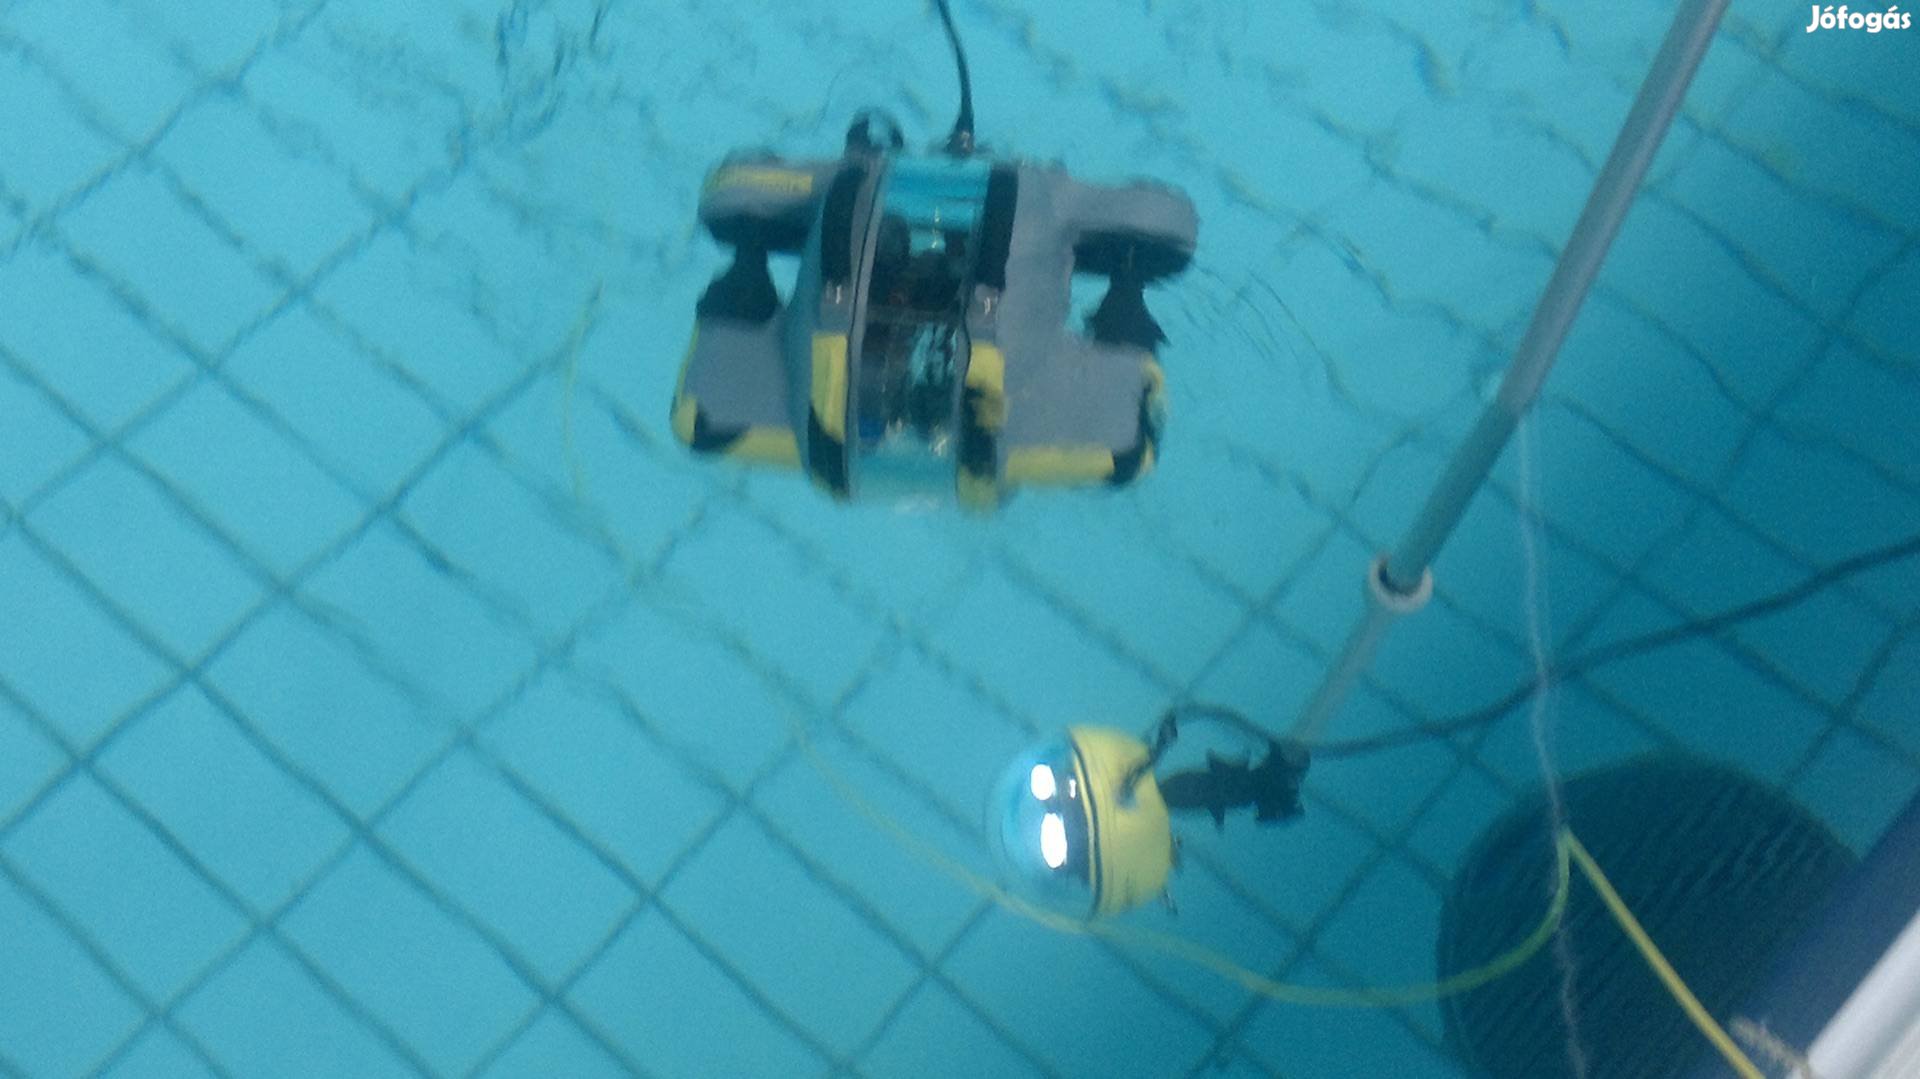 Deep Trekker víz alatti ipari robot kamera